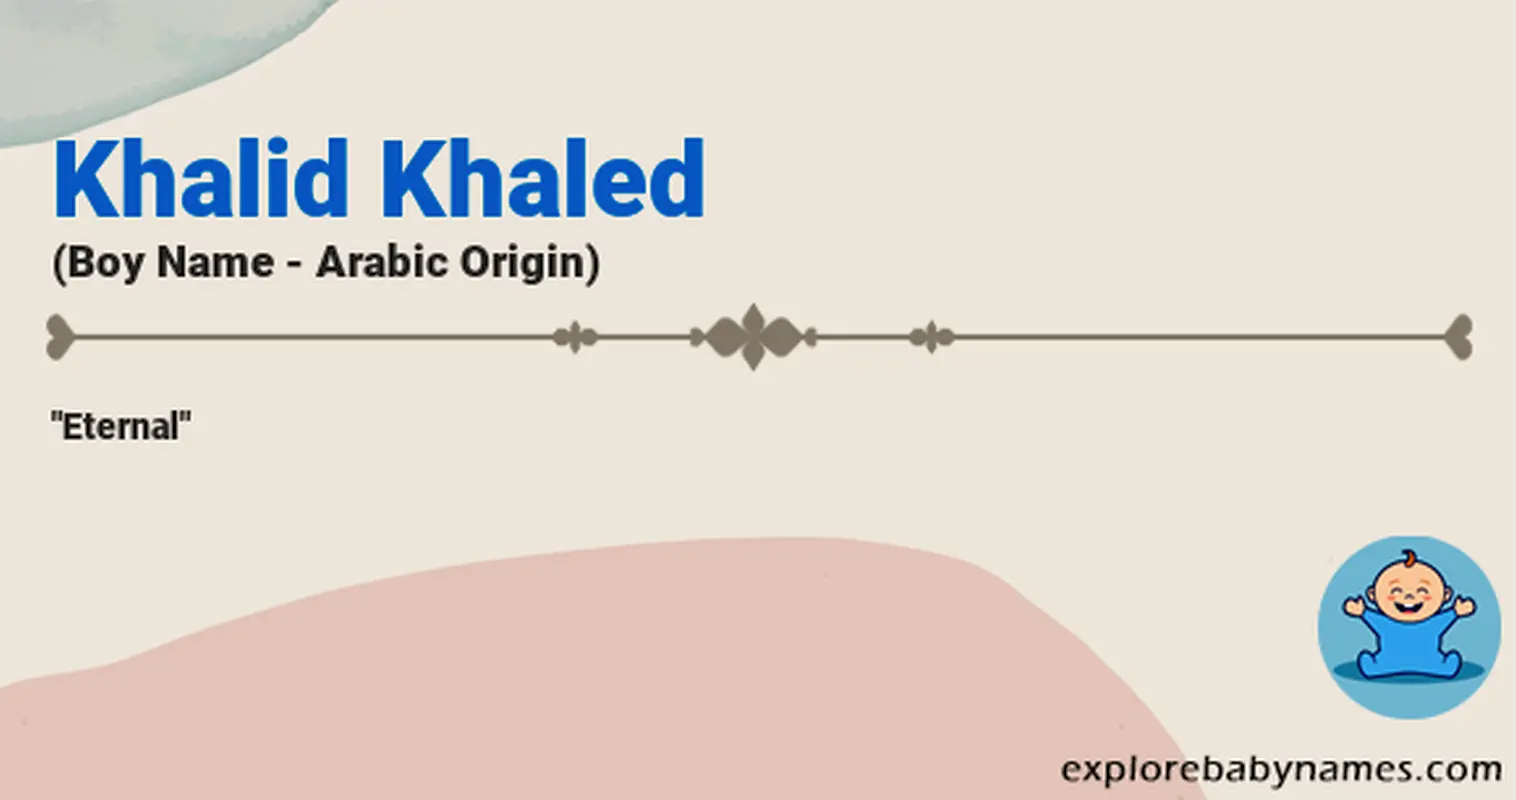 Meaning of Khalid Khaled